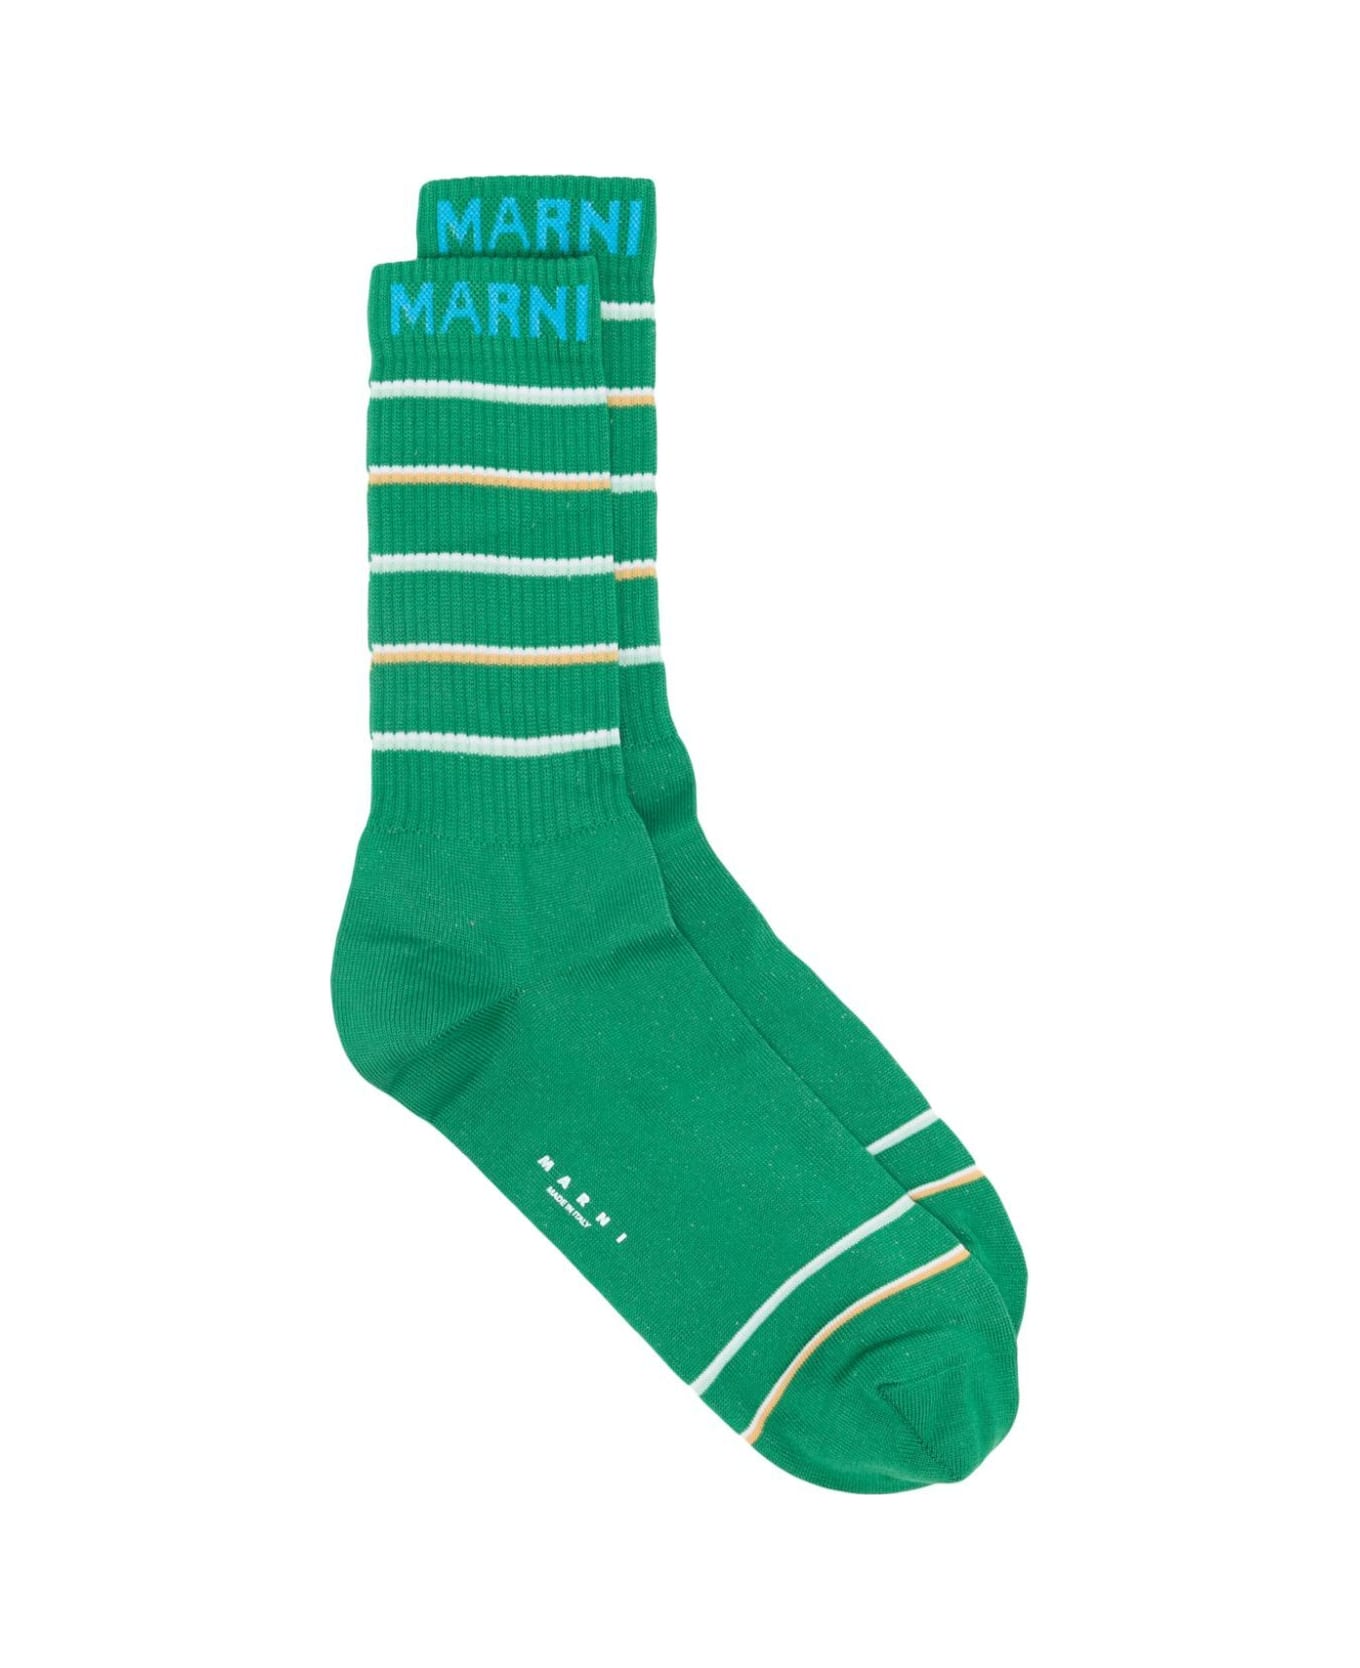 Marni Socks - Sea Green